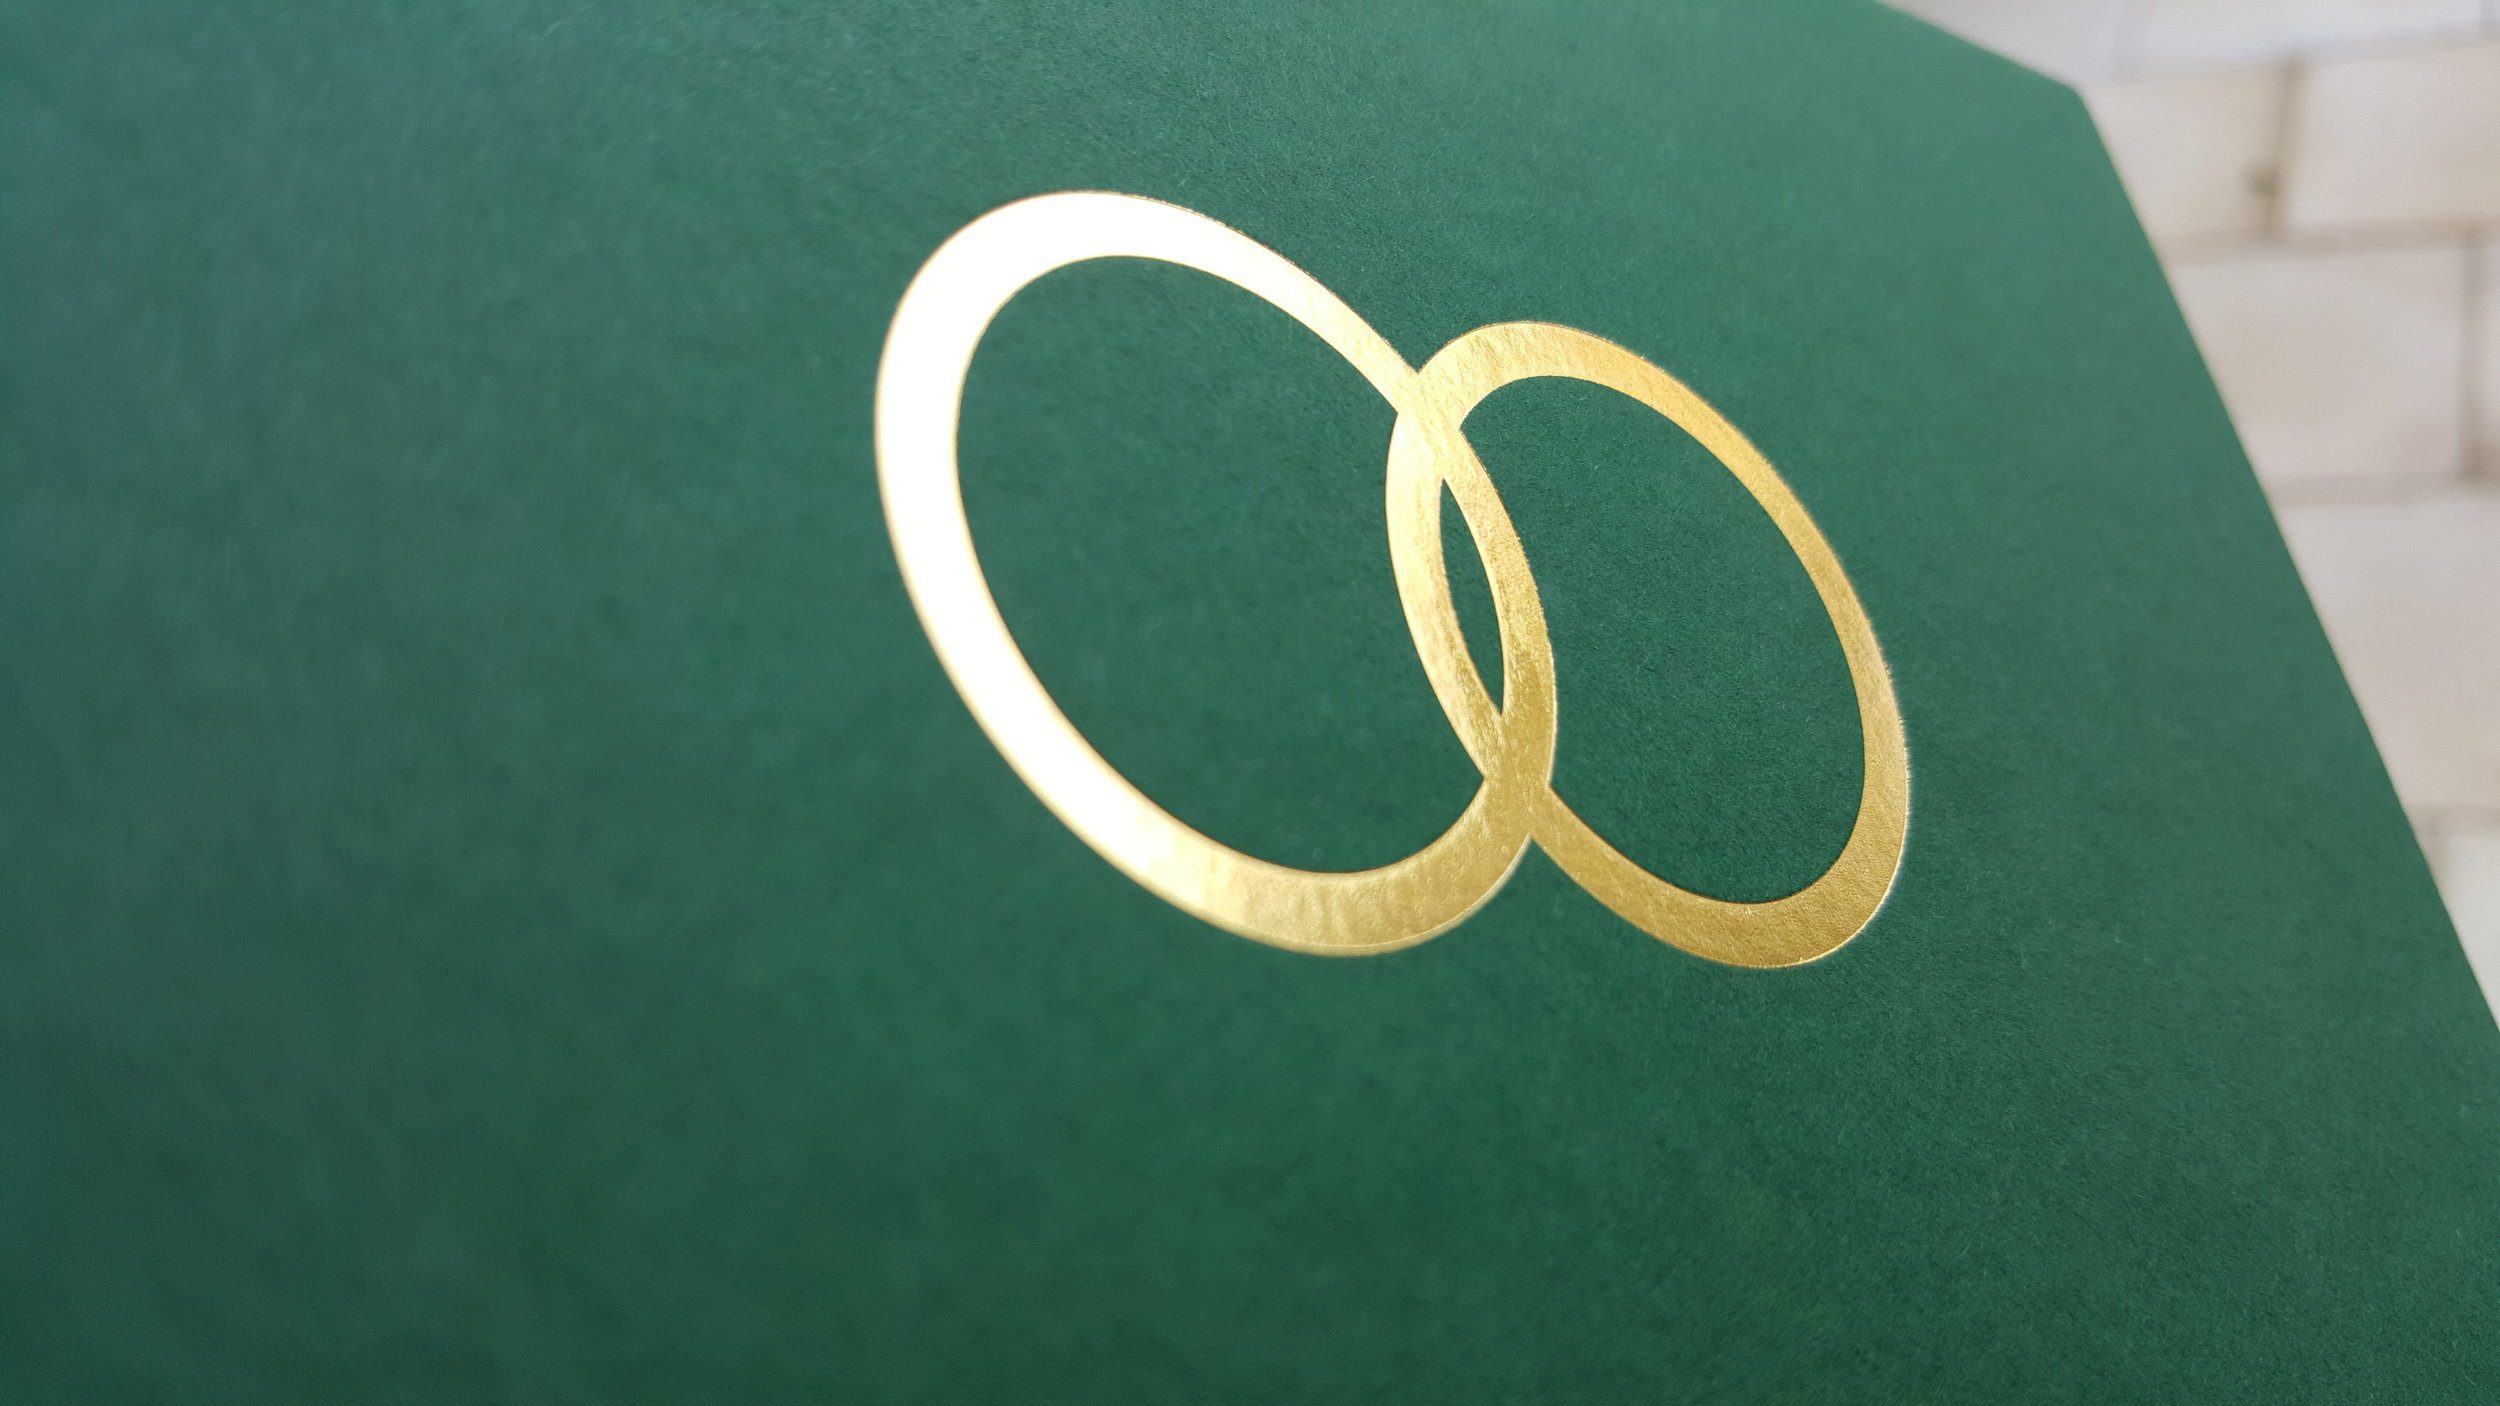 Ring emblem for wedding invitations